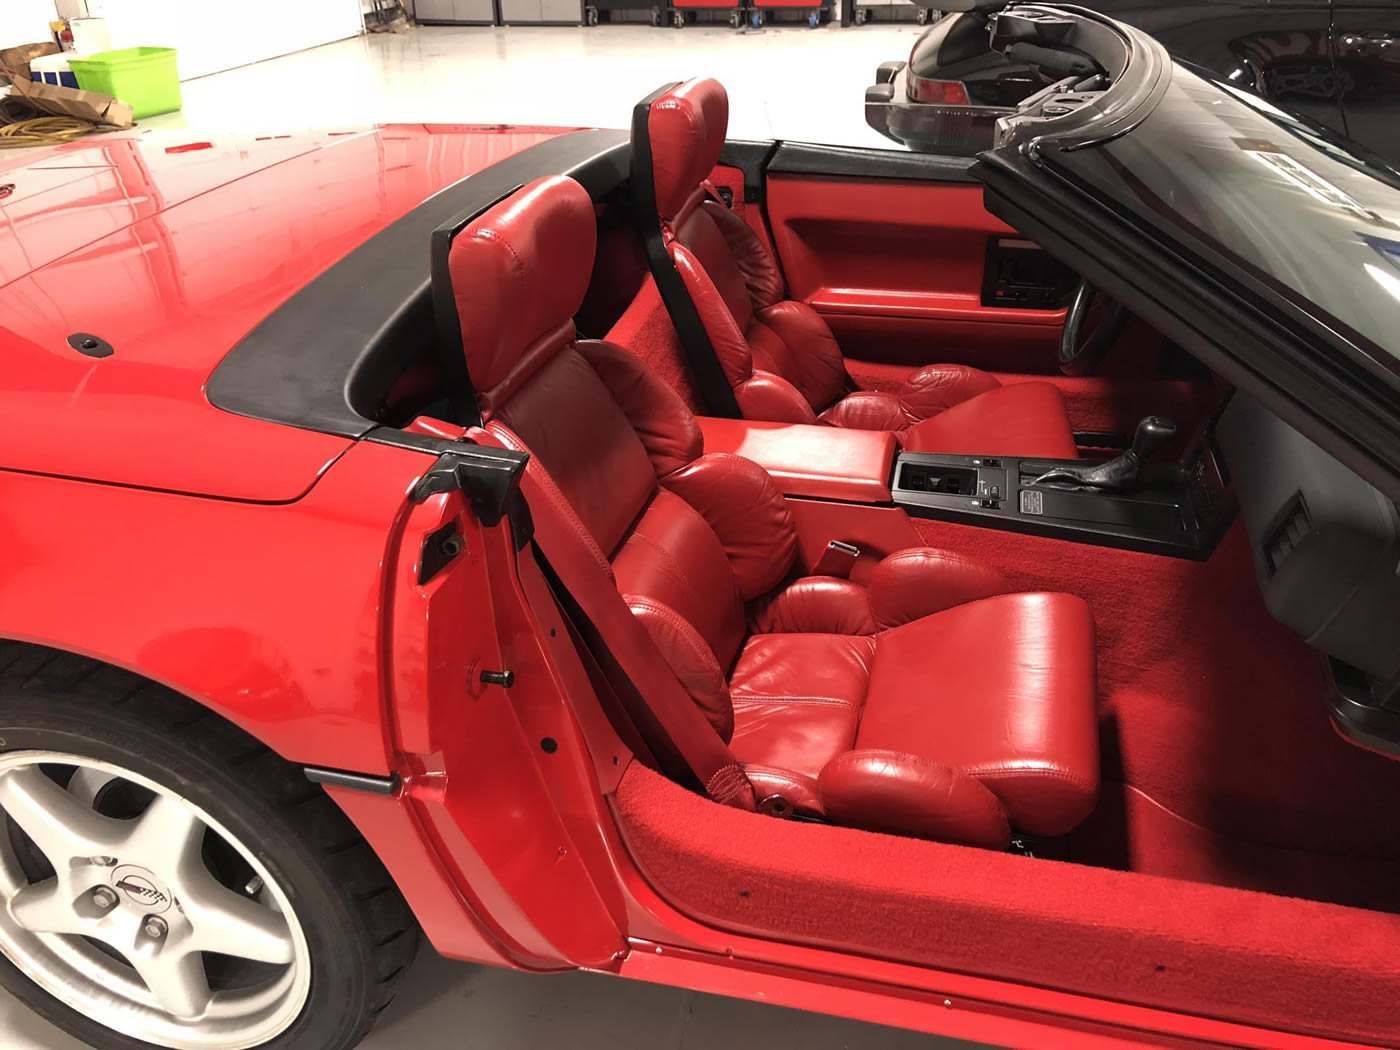 1989 Corvette Callaway Twin Turbo Convertible in Bright Red